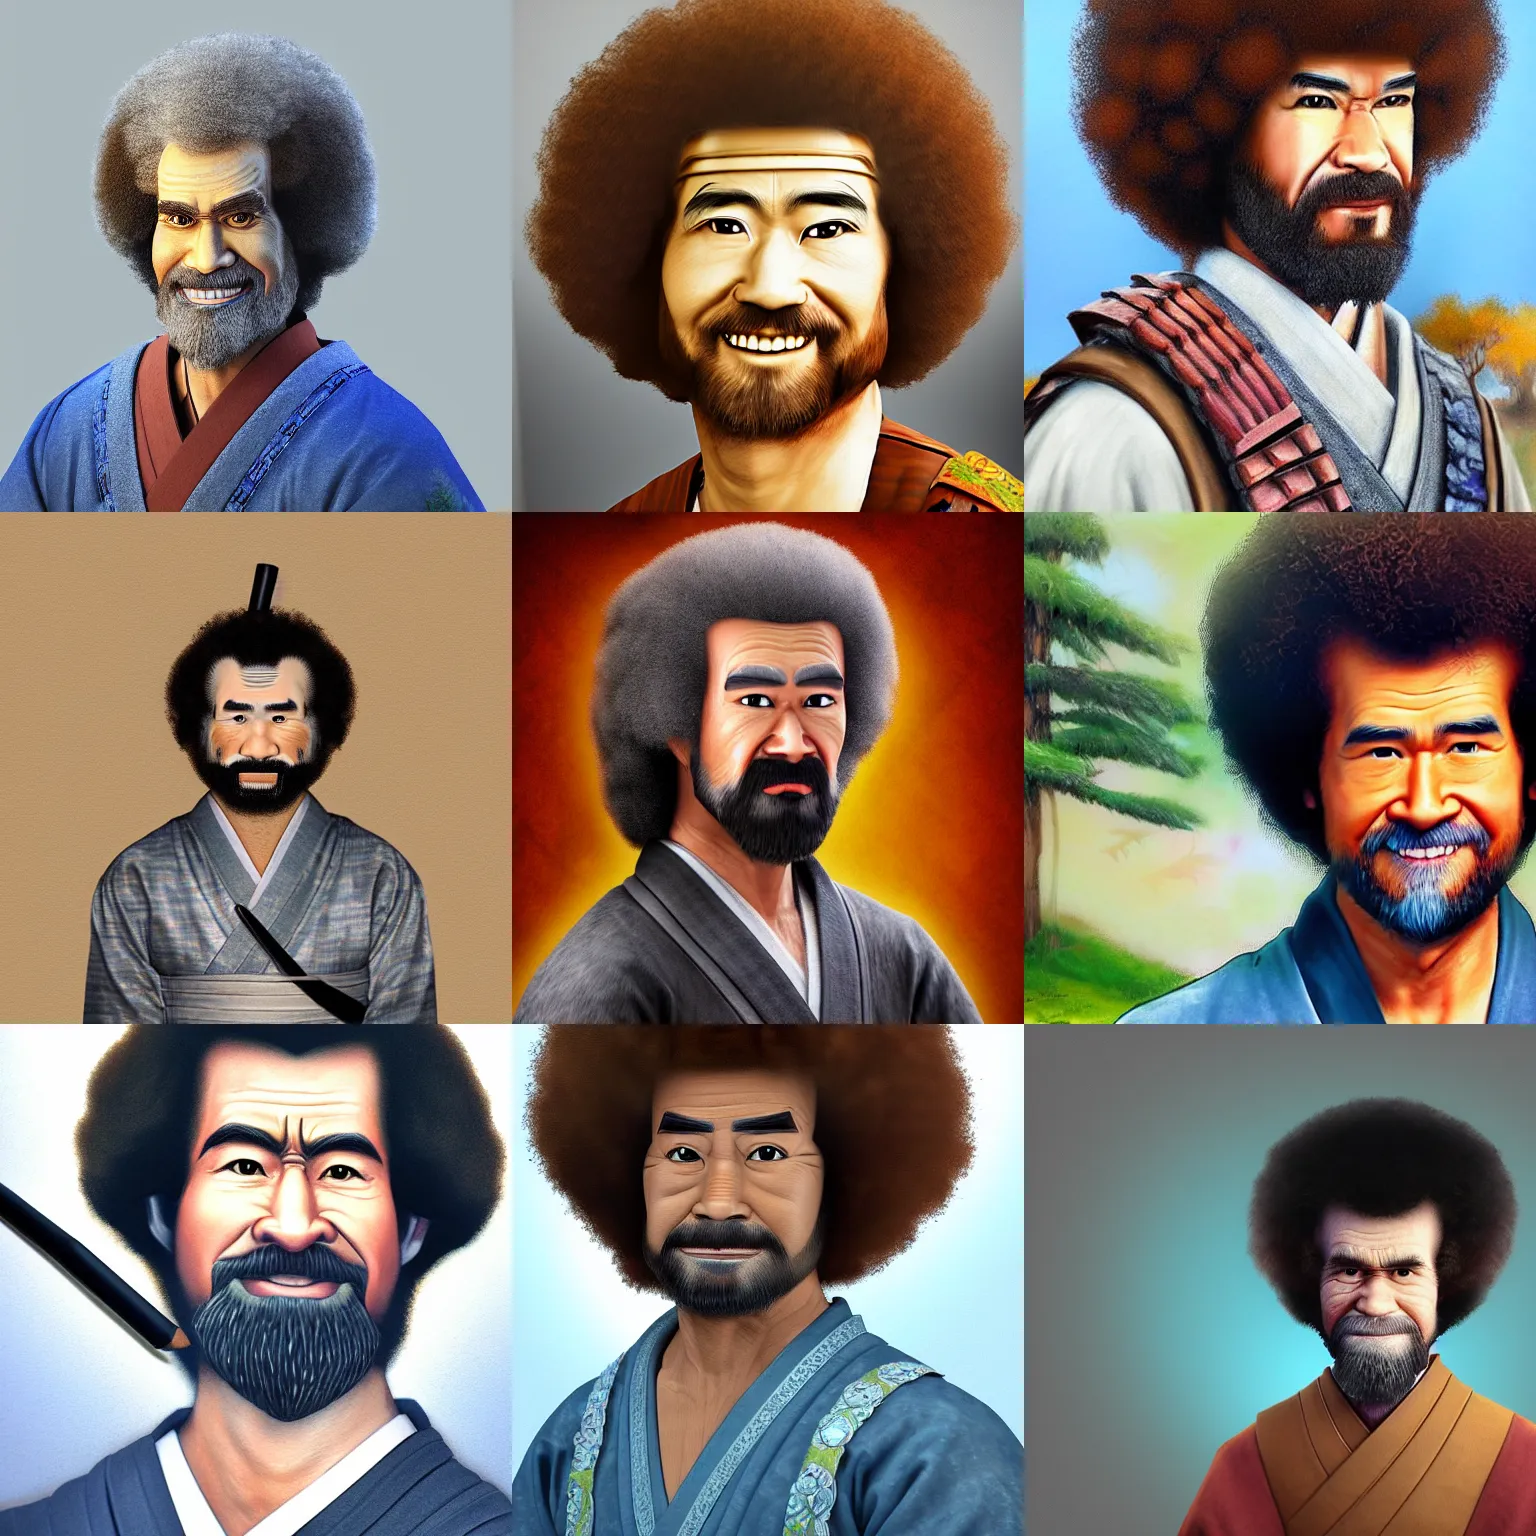 Prompt: realistic detailed photo portrait of a Samurai Bob Ross